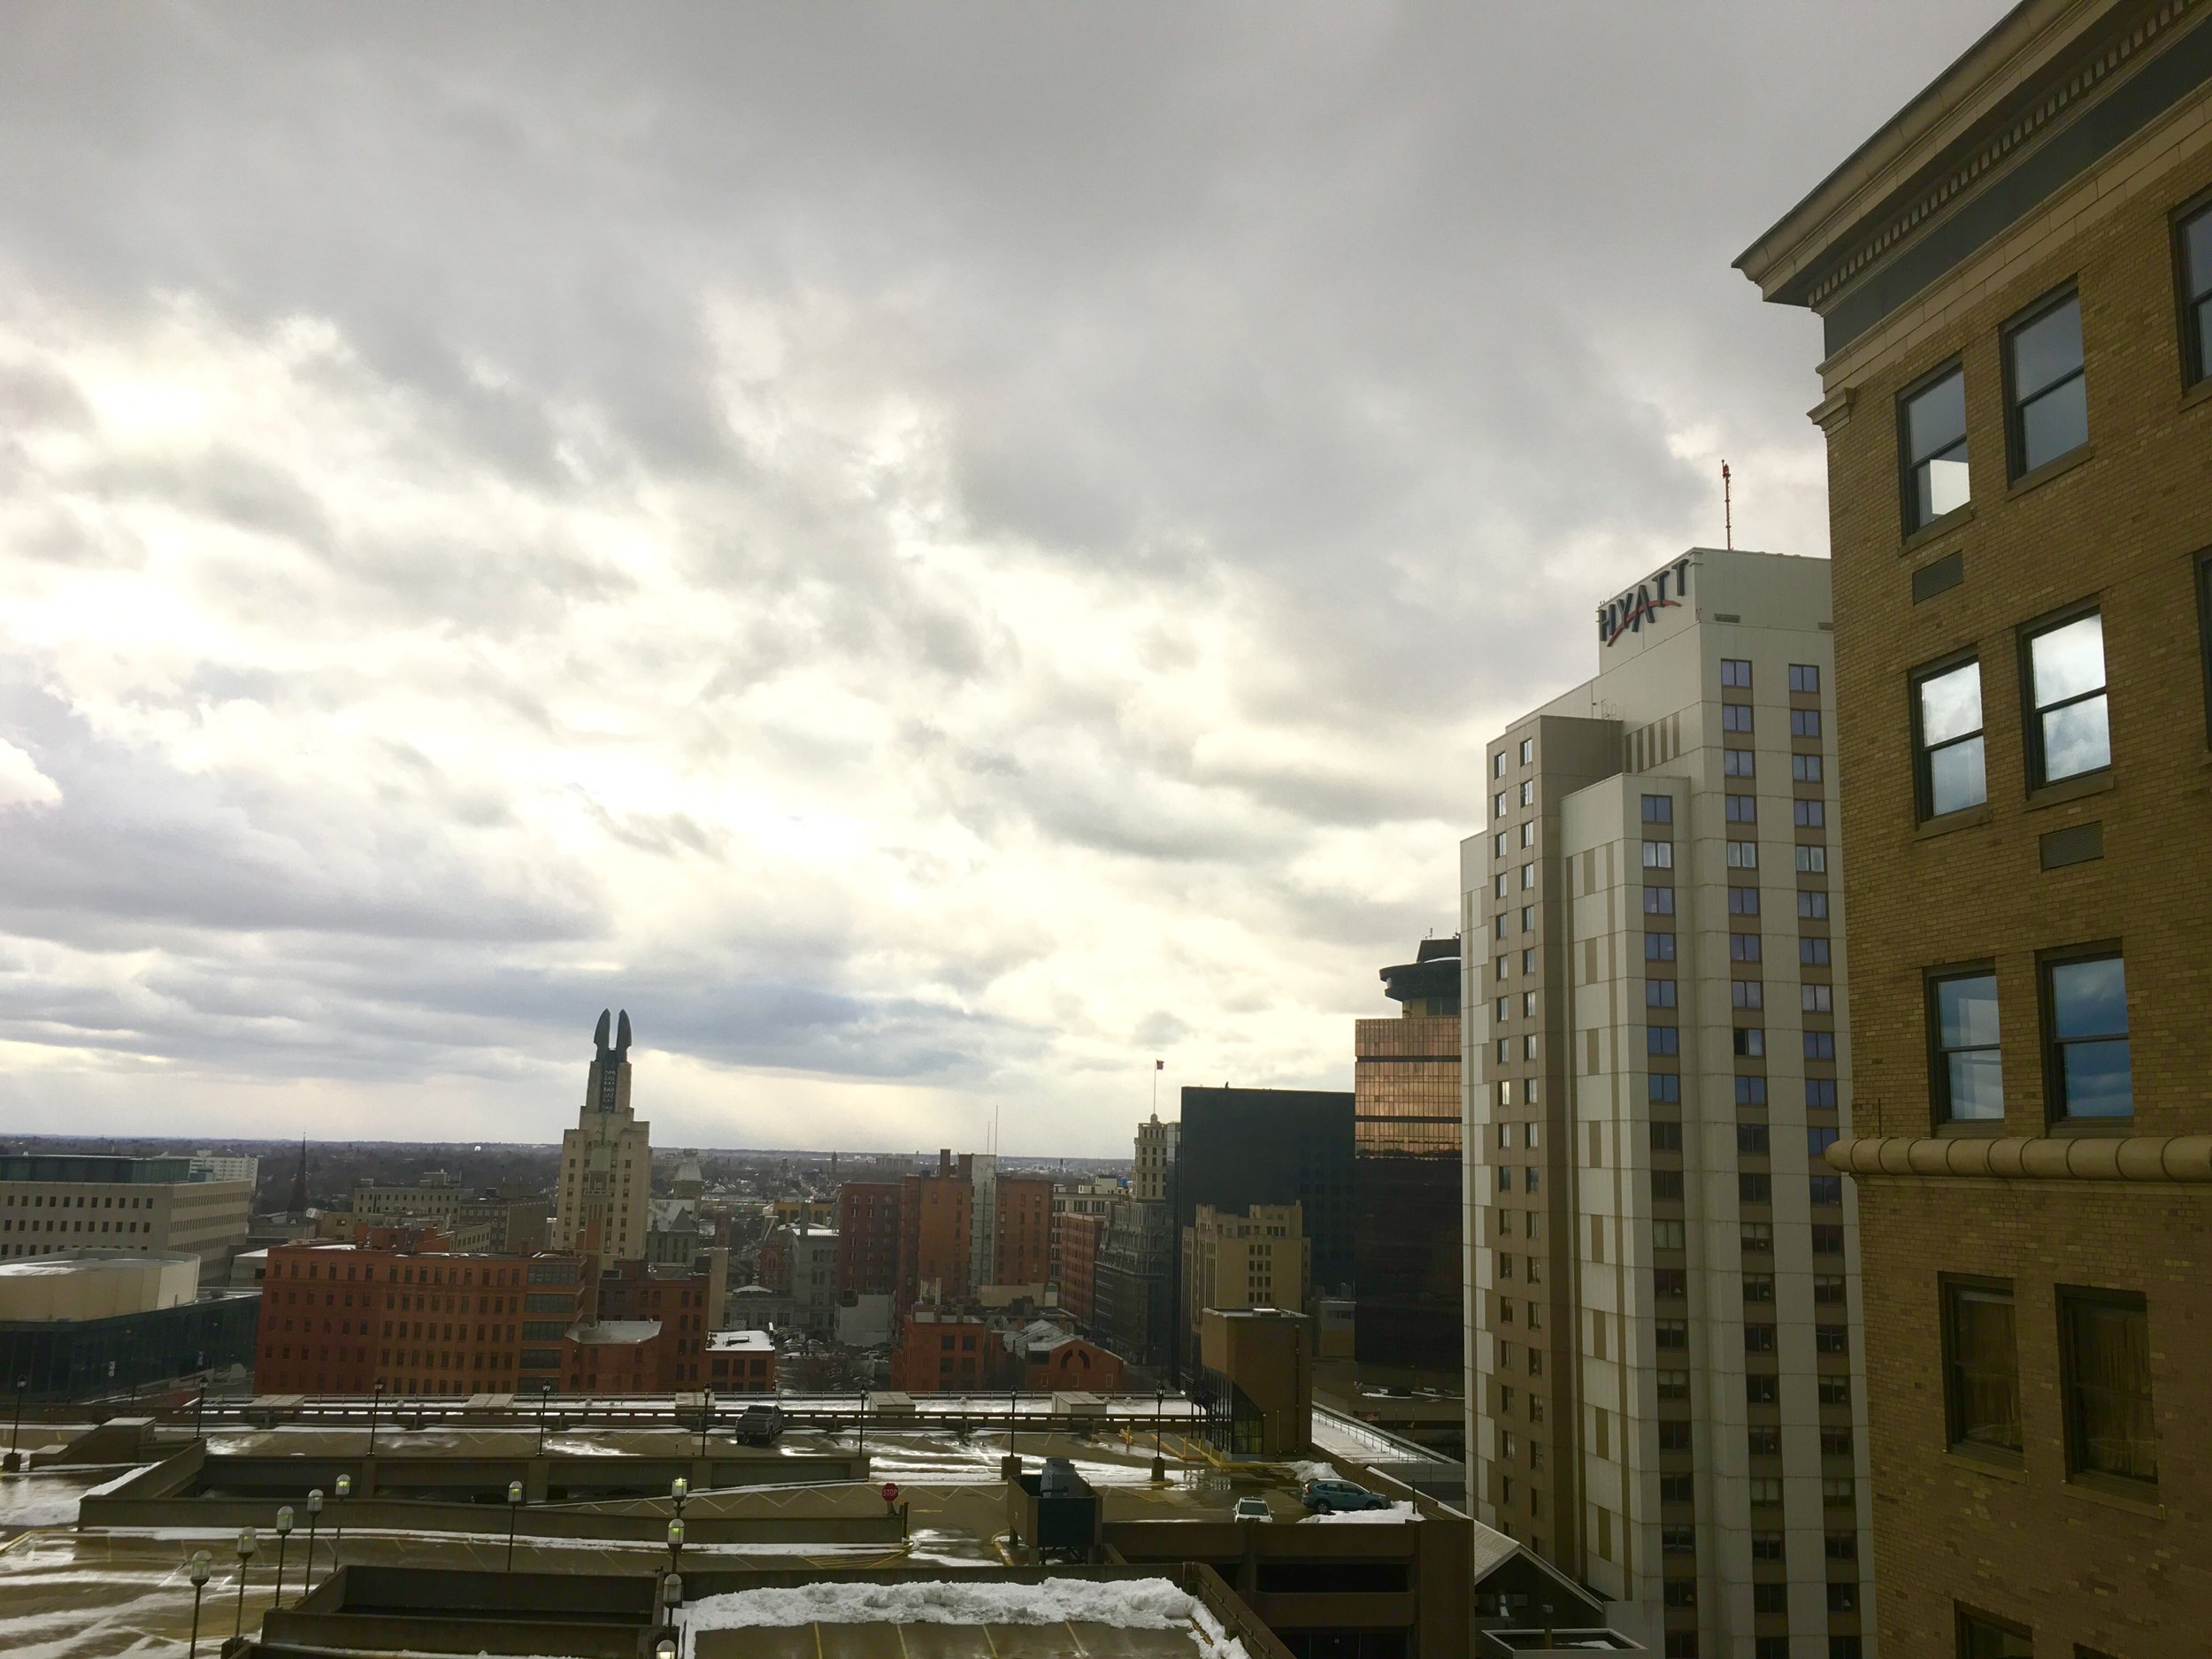 City of Rochester skyline